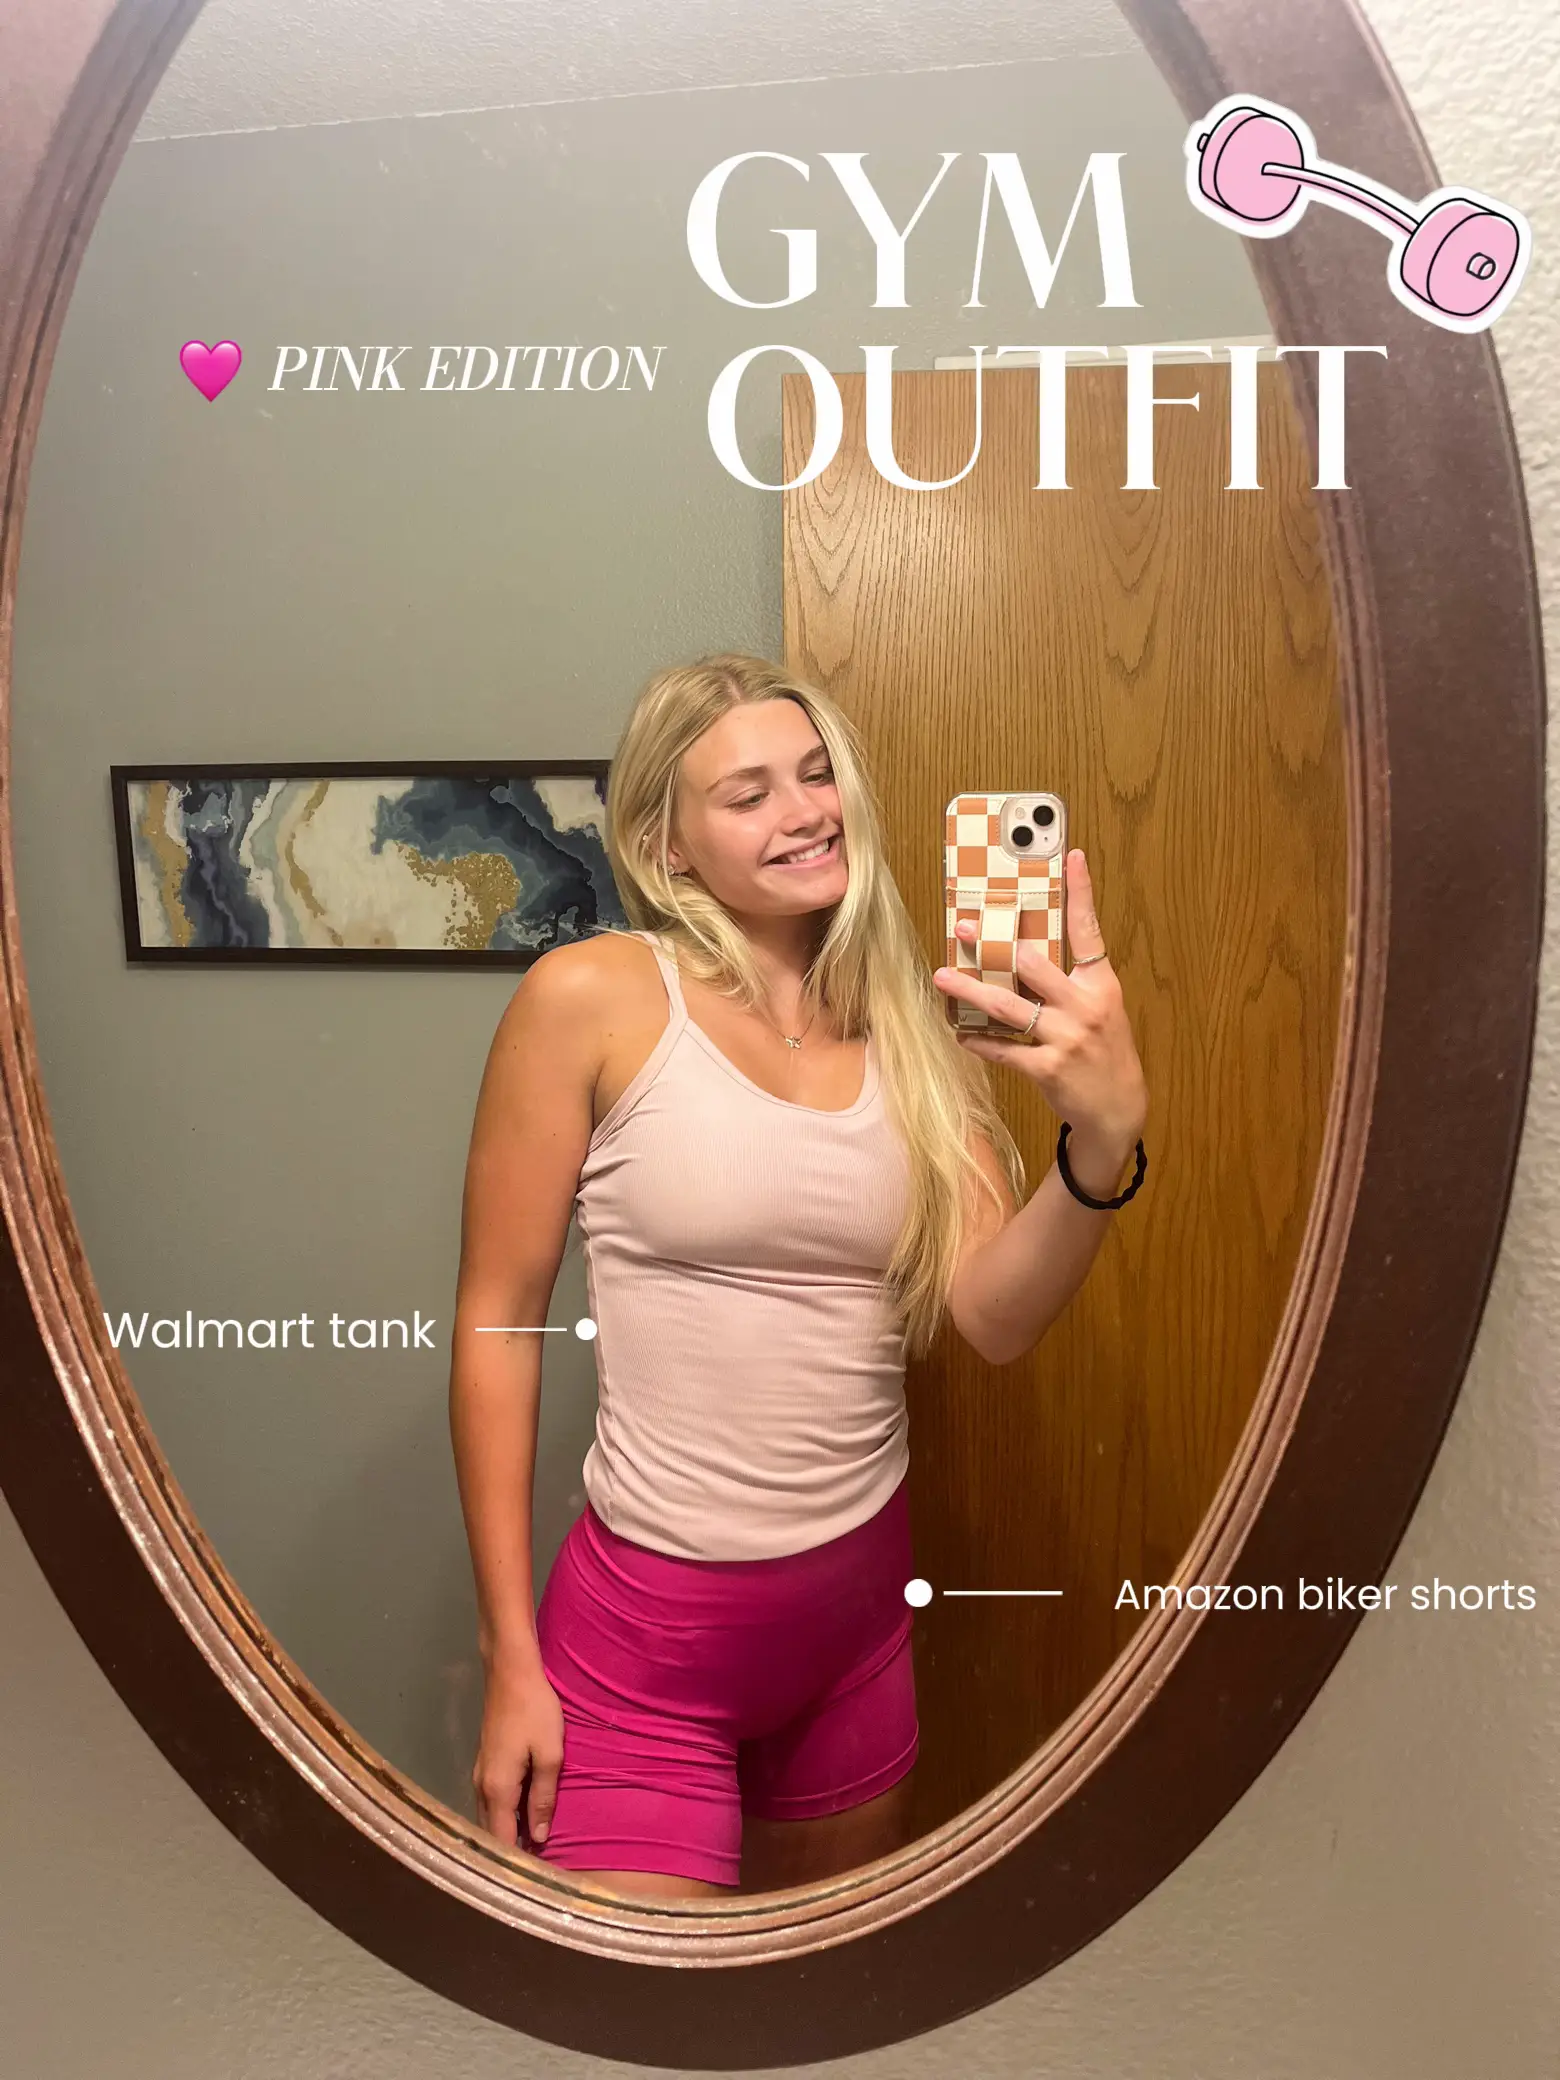 Aurola intensify workout shorts Pink - Depop